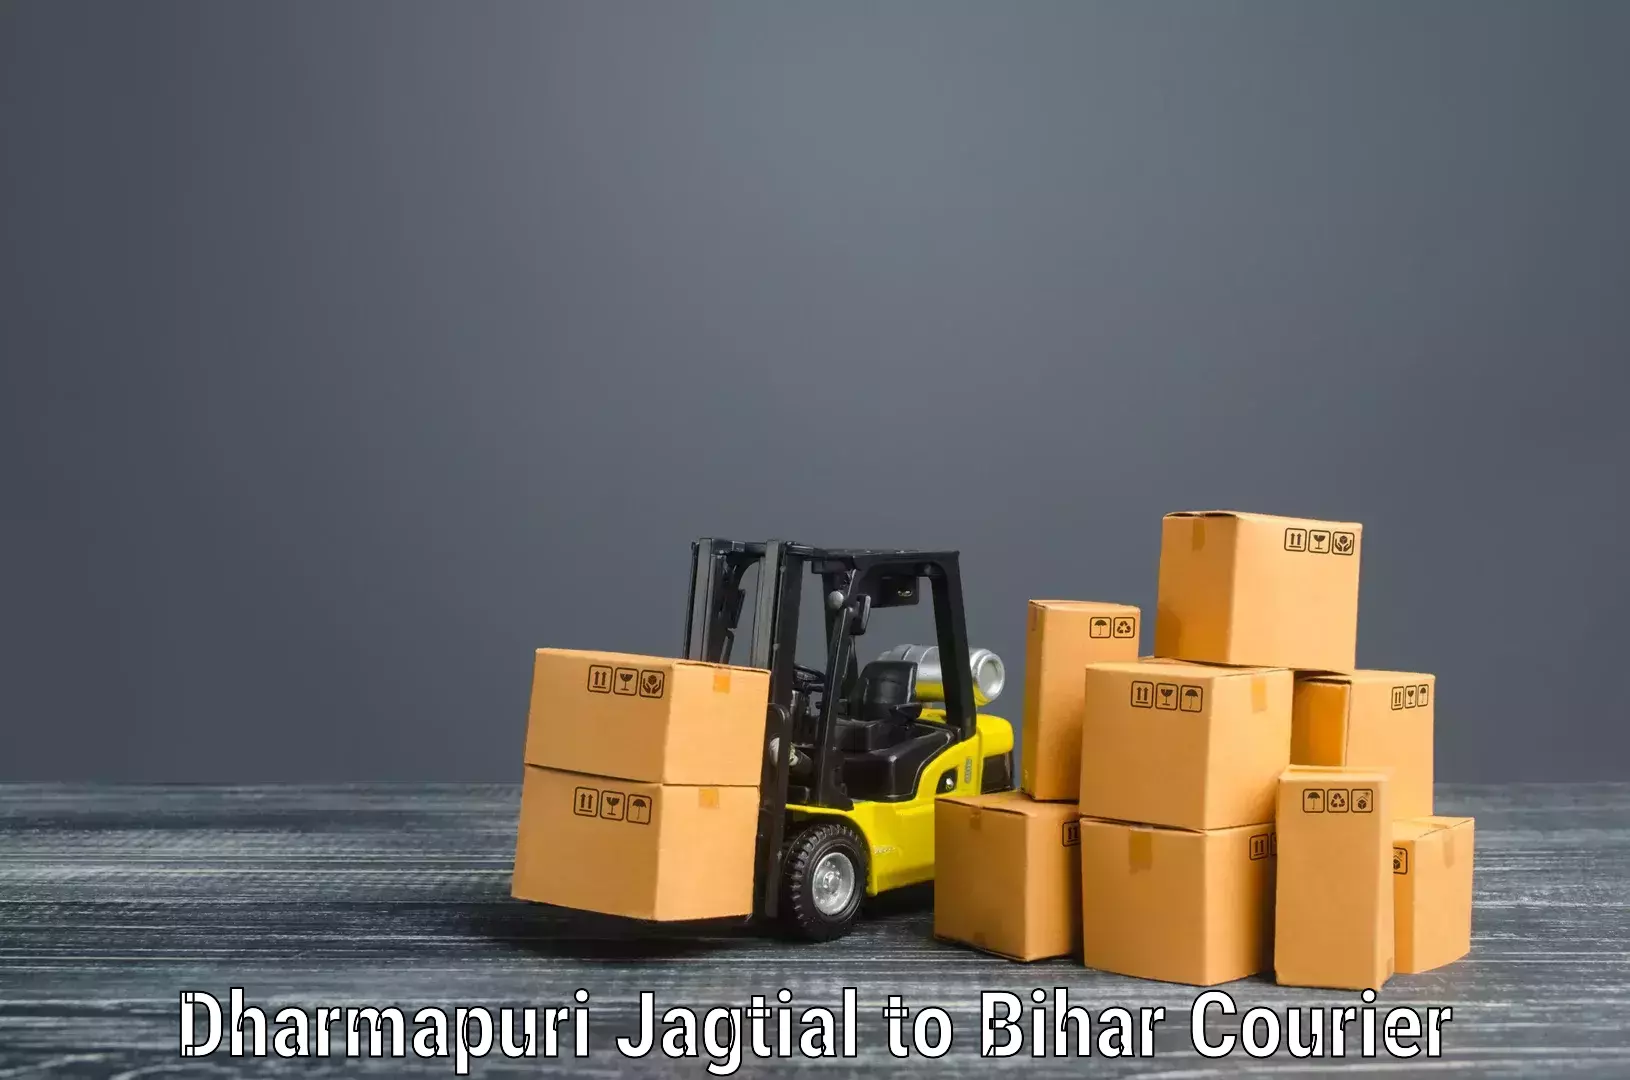 Expert furniture transport in Dharmapuri Jagtial to Bihar